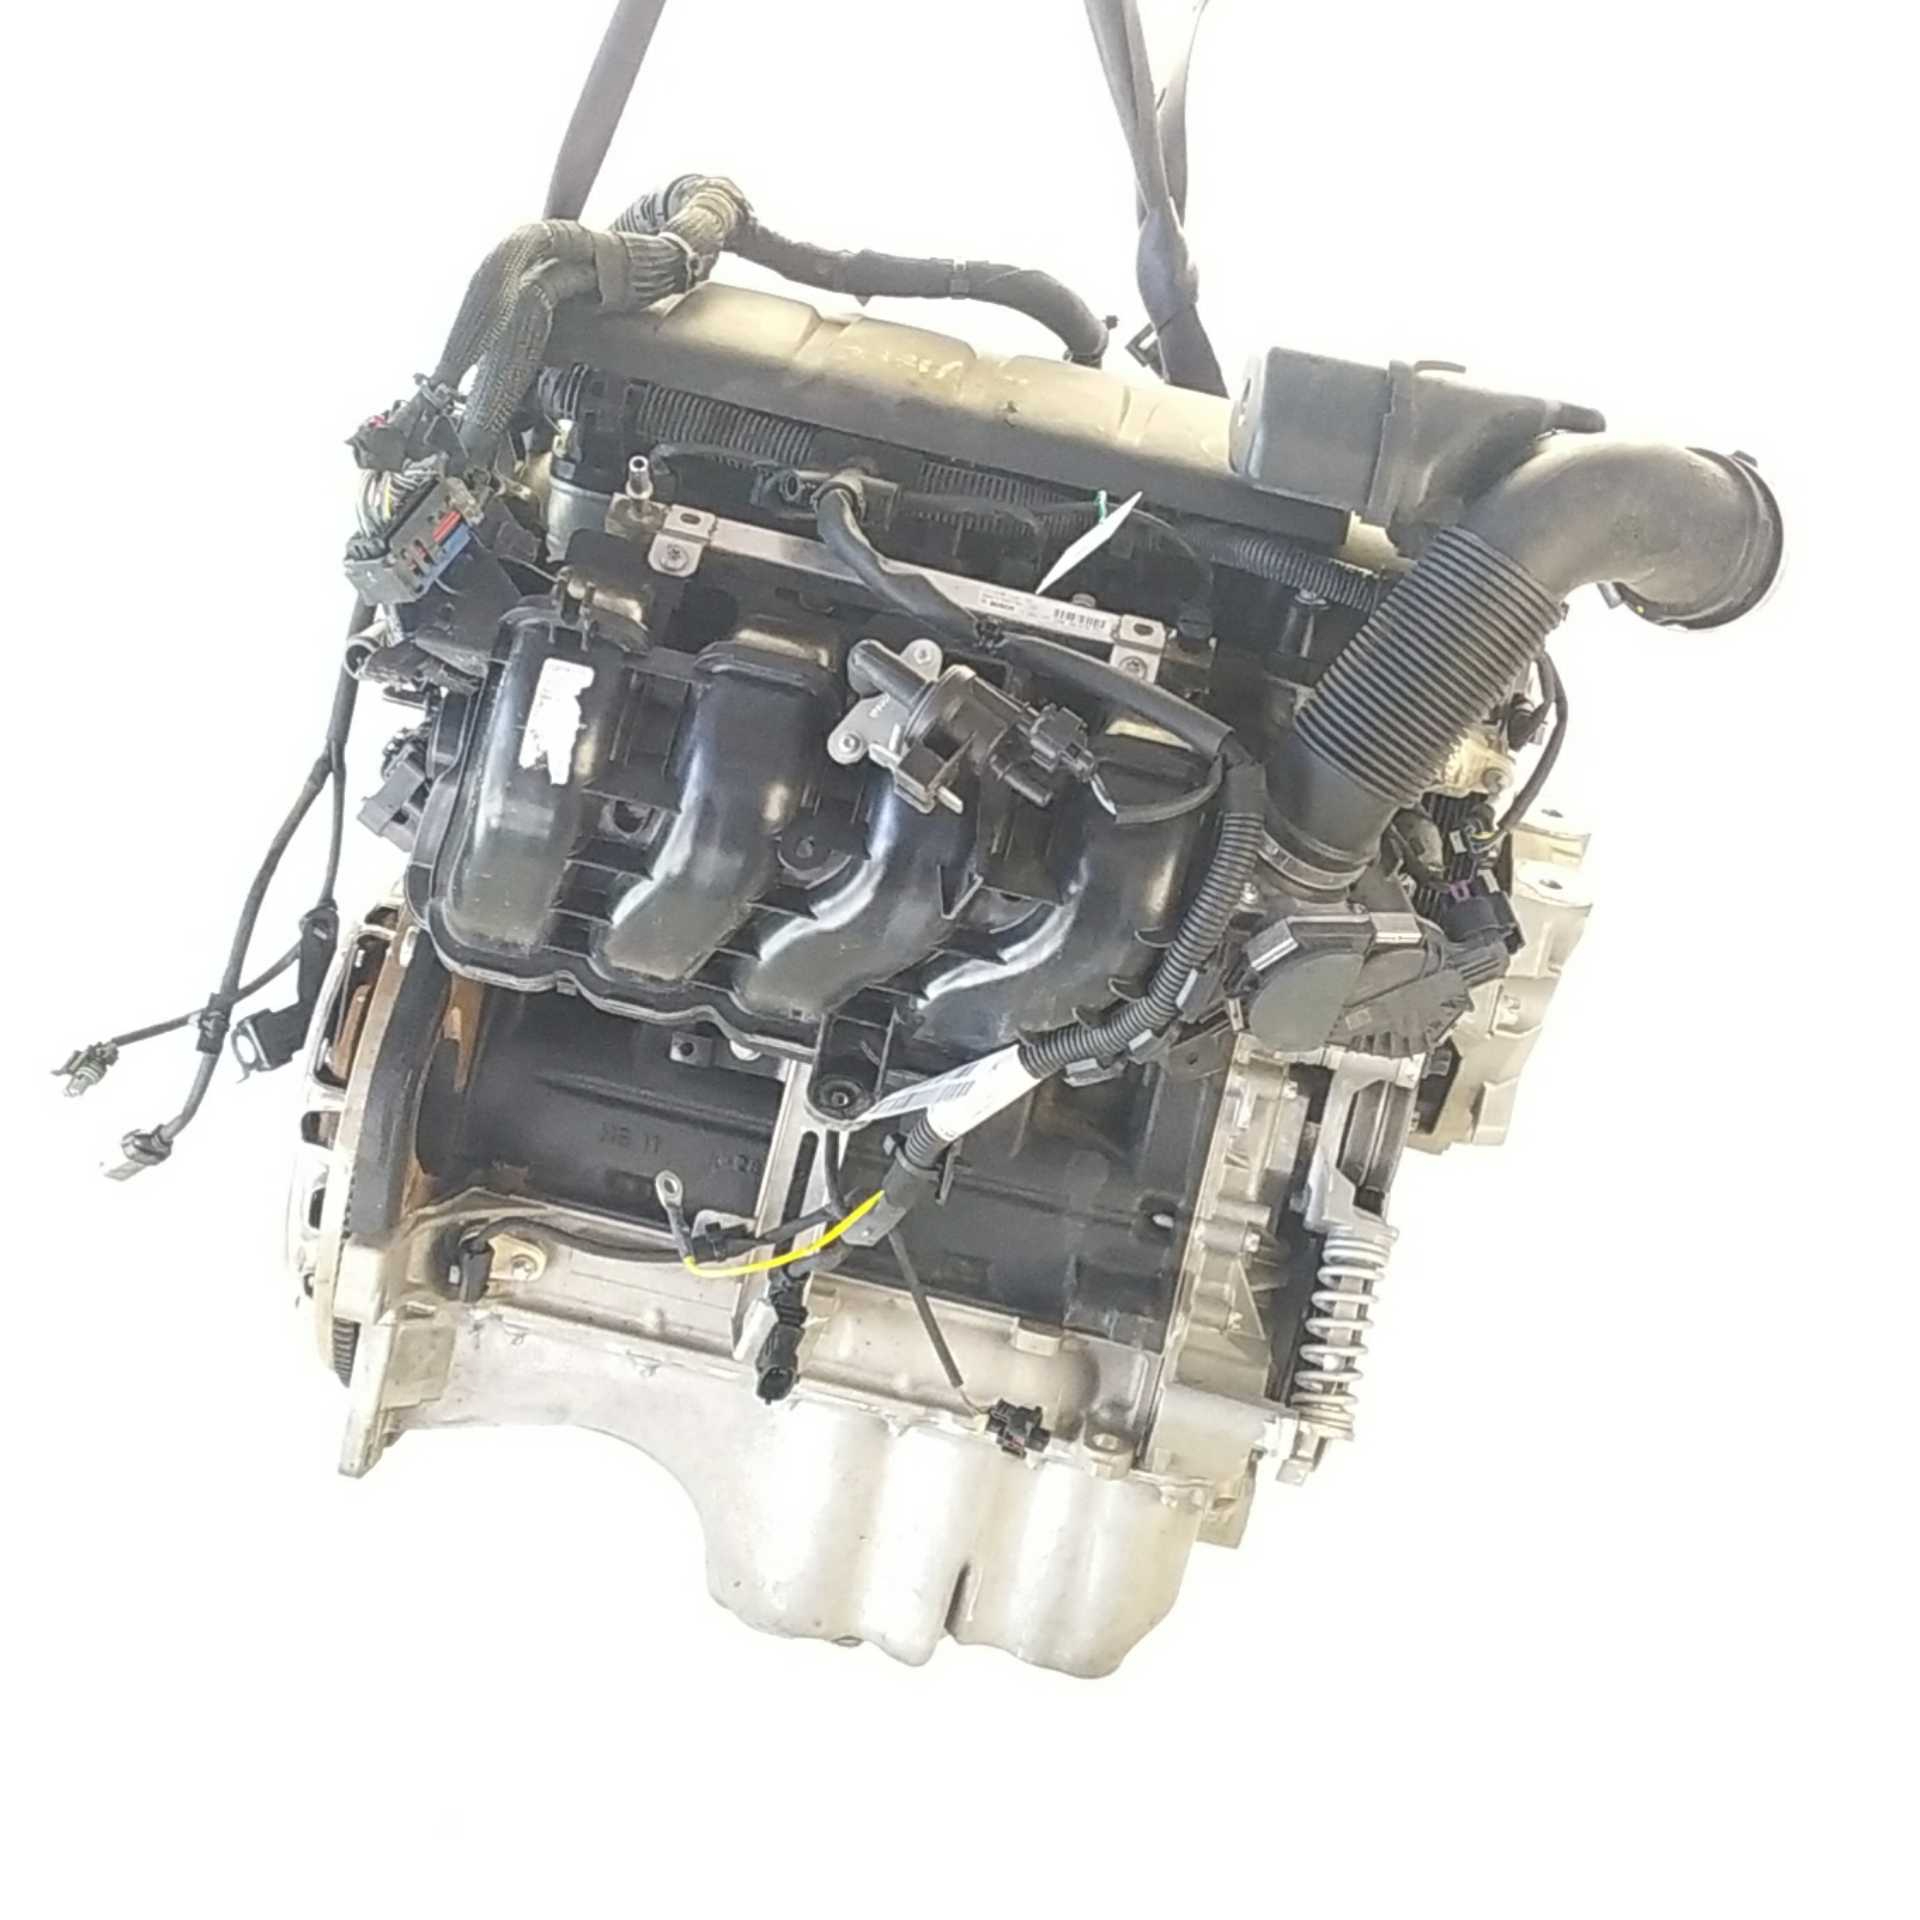 MOTOR OPEL ADAM 1.4 LPG (64 KW / 87 CV) (07.2013 - ...)